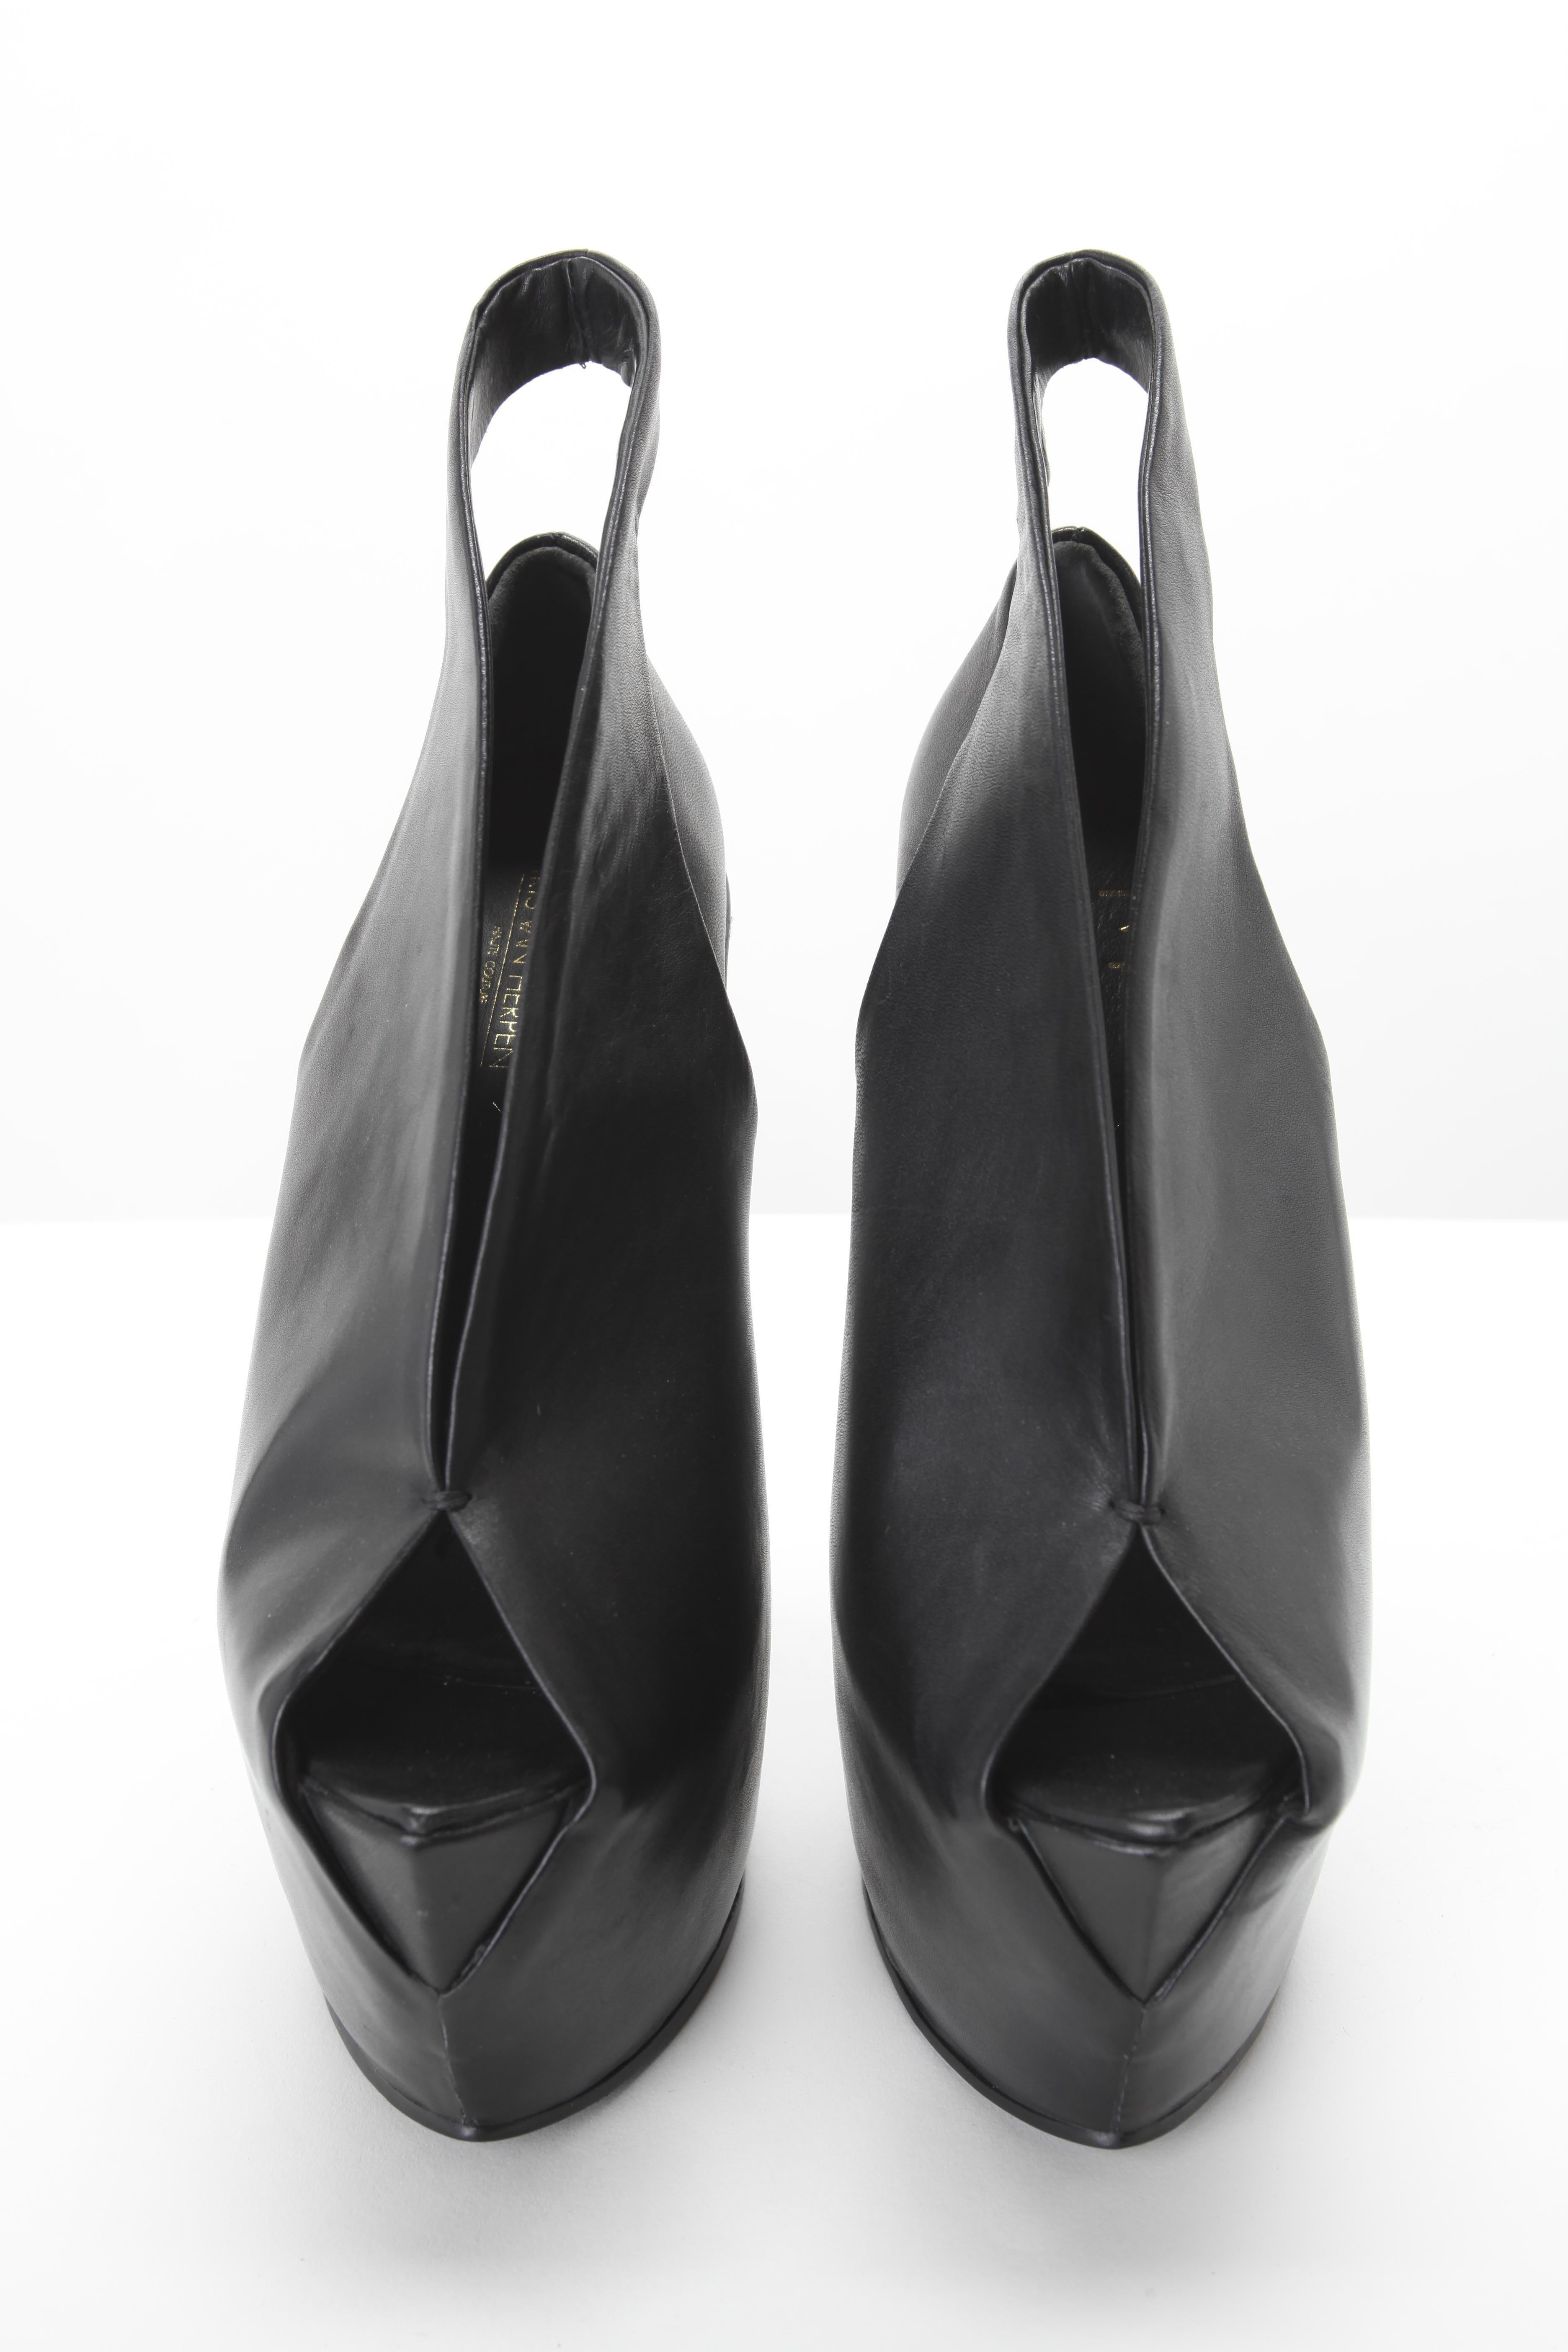 Black Iris Van Herpen Couture Ankle Bootie Wedge Pumps Biopiracy Collection 2014 Rare!